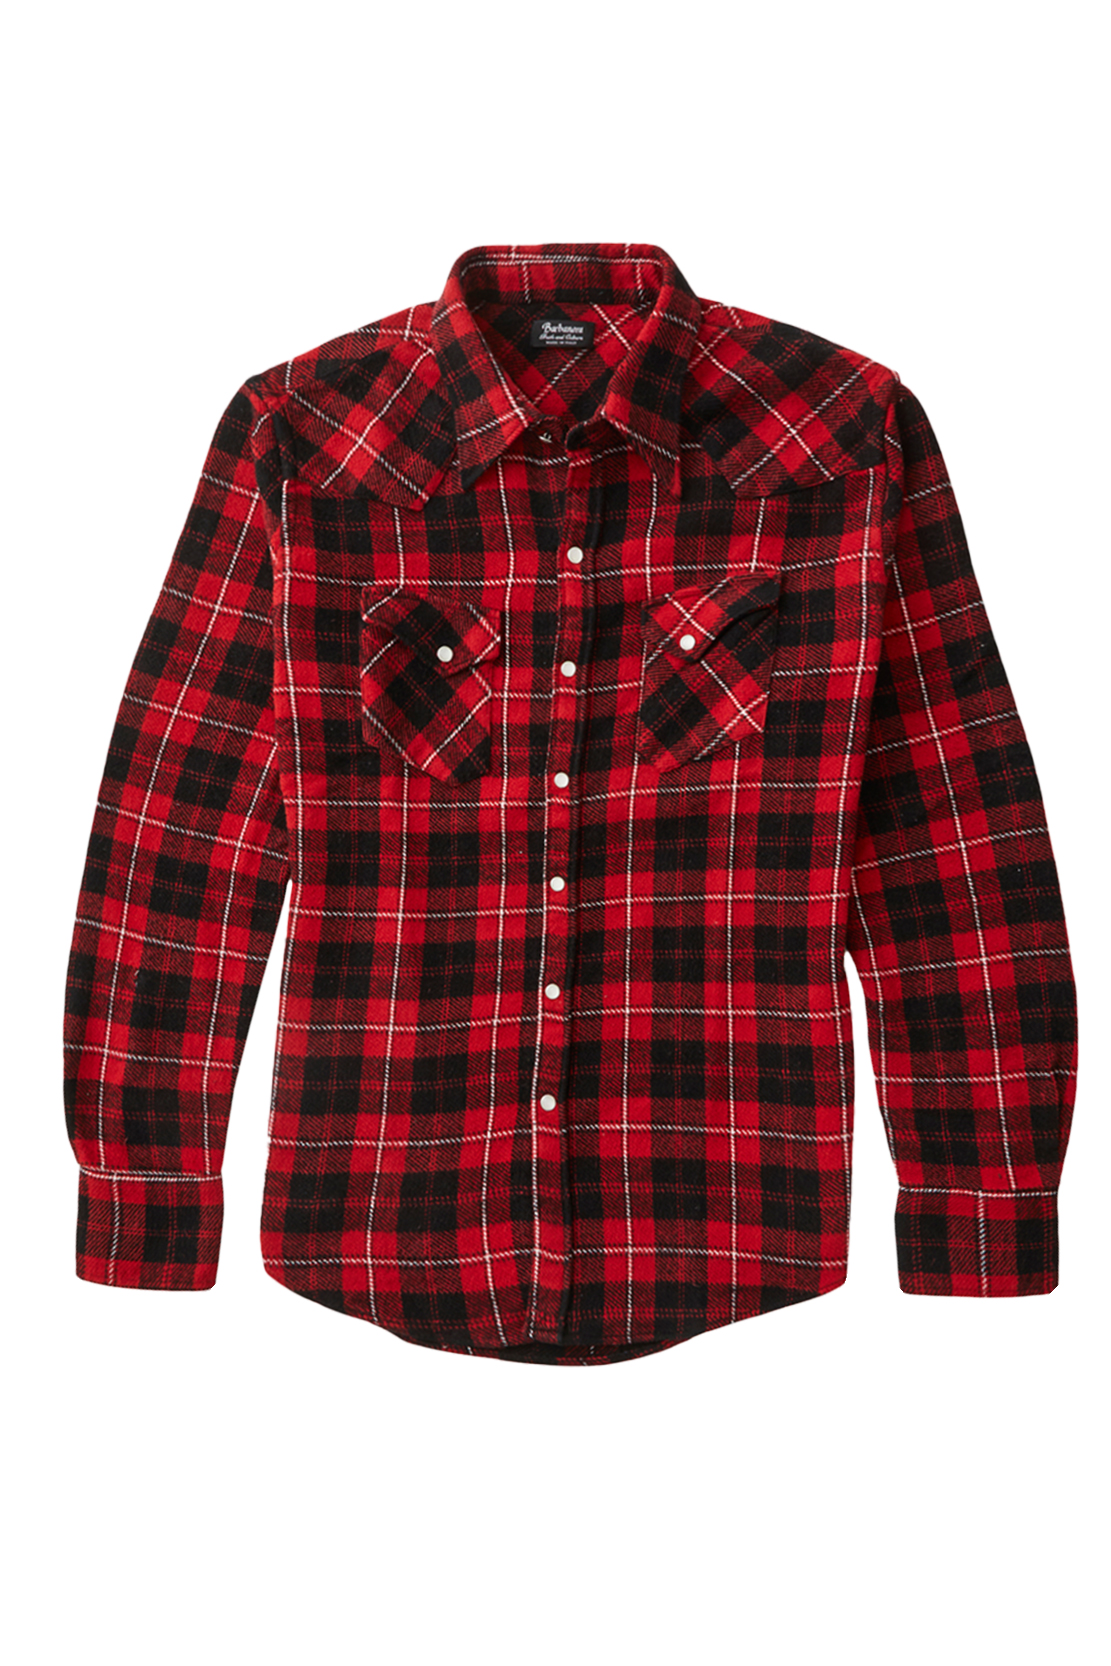 FDP Red/black Plaid Japanese Cotton Western Shirt - Barbanera